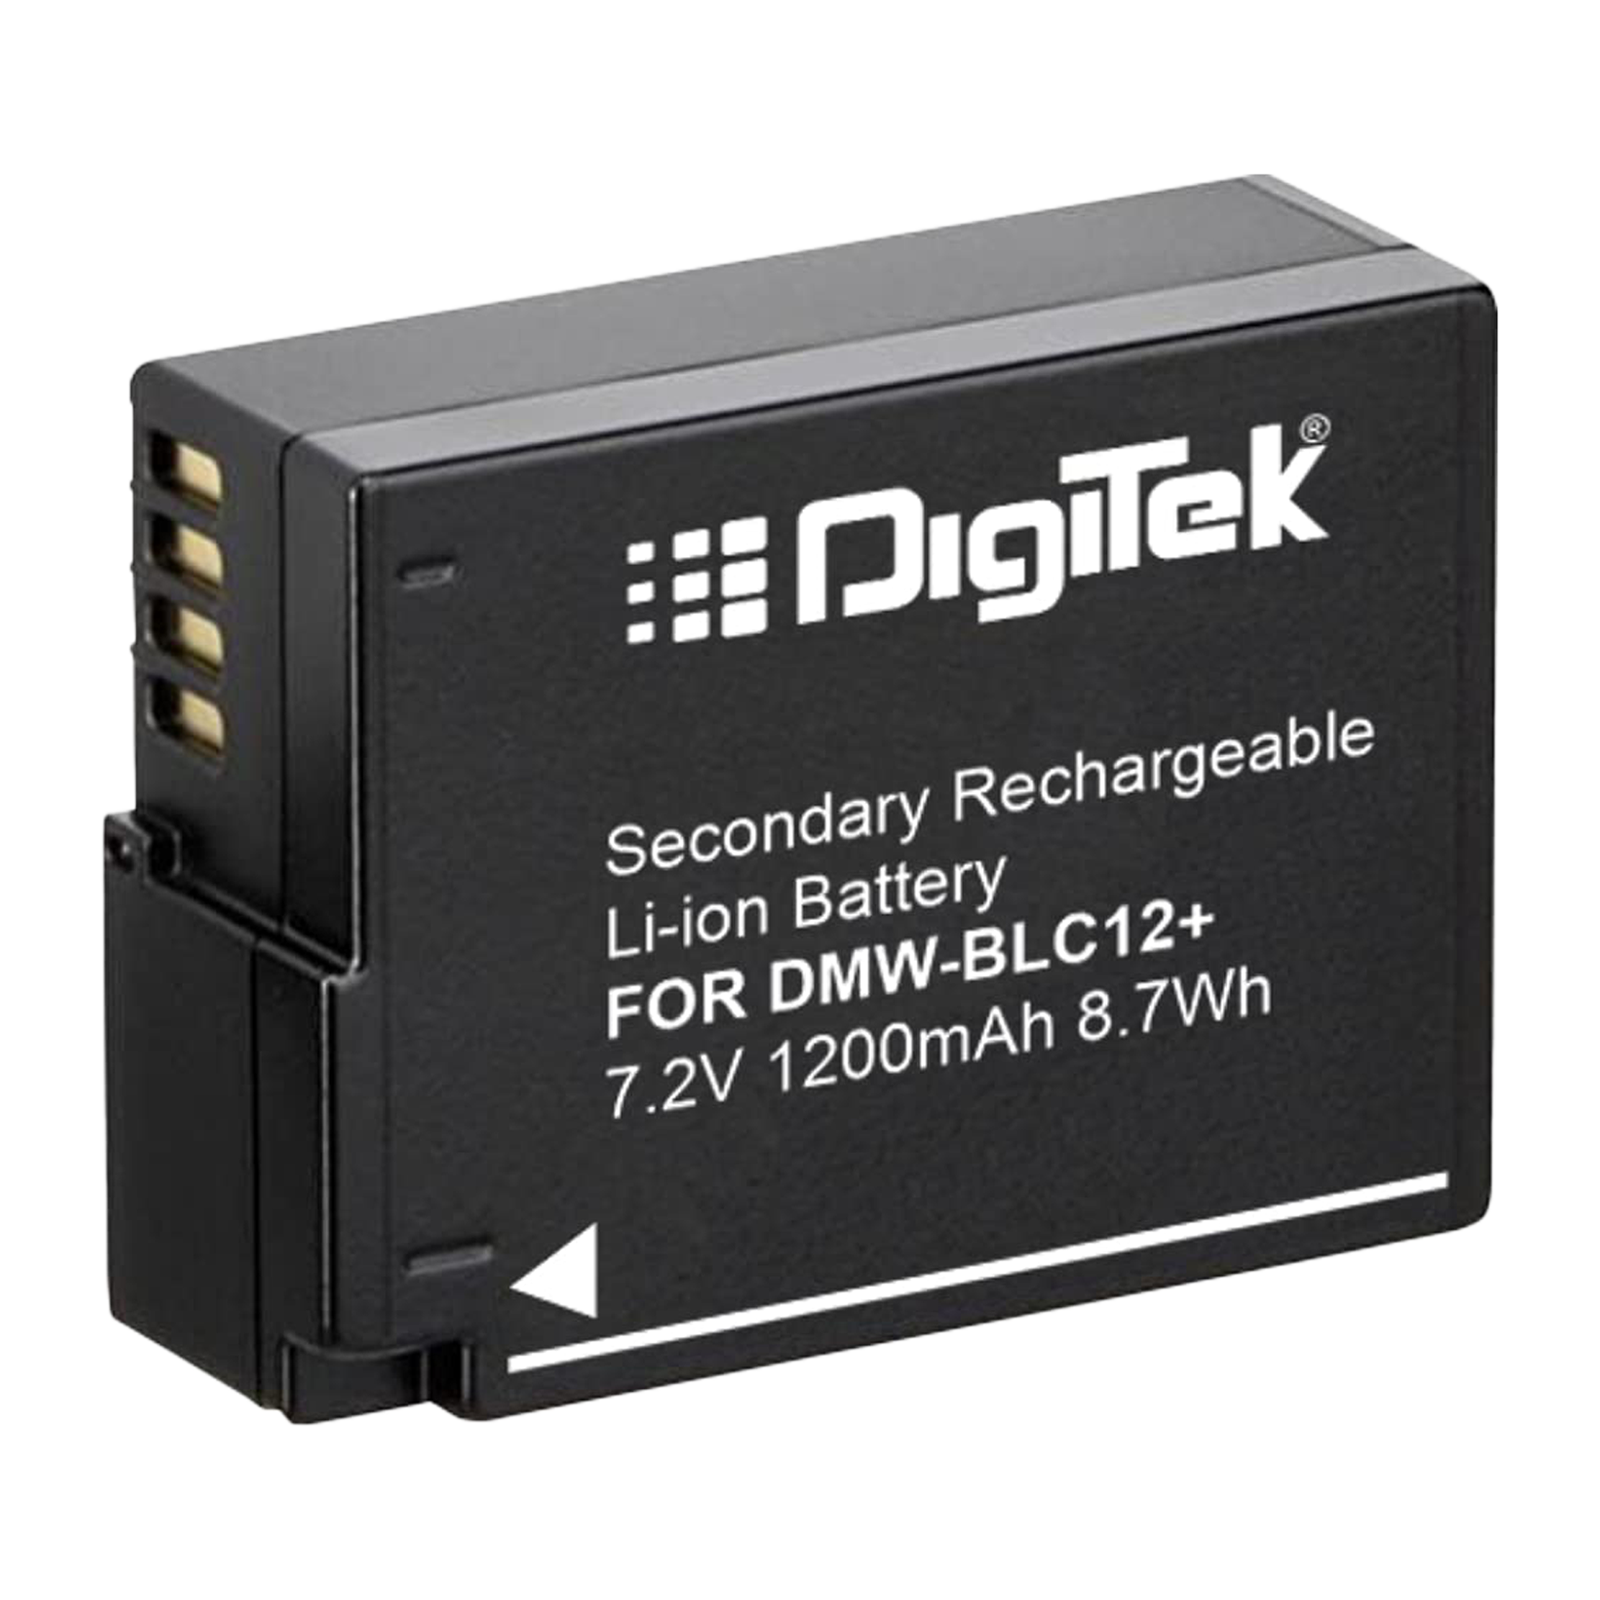 DigiTek DMW-BLC12+ 1200 mAh Li-ion Rechargeable Battery